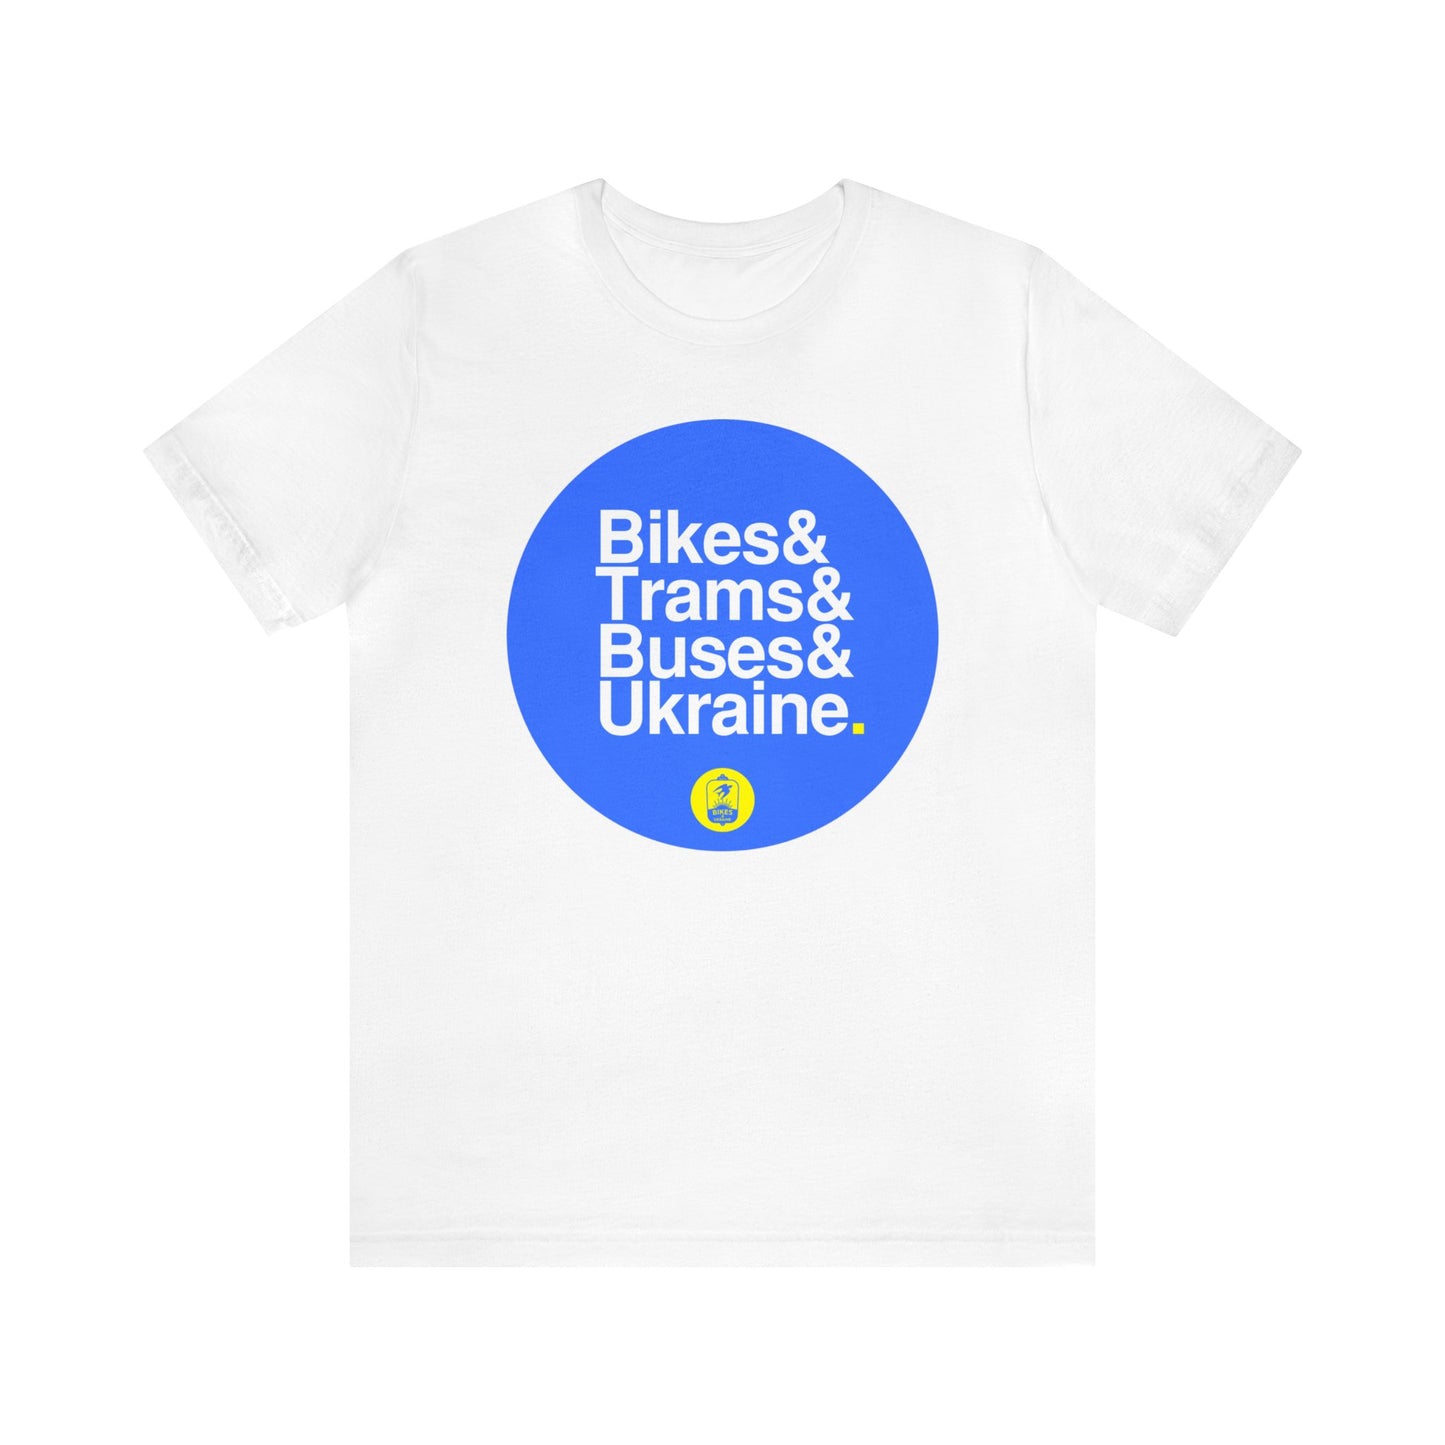 Bikes & Trams & Buses & Ukraine T-shirt - Blue - Unisex Jersey Short Sleeve Tee